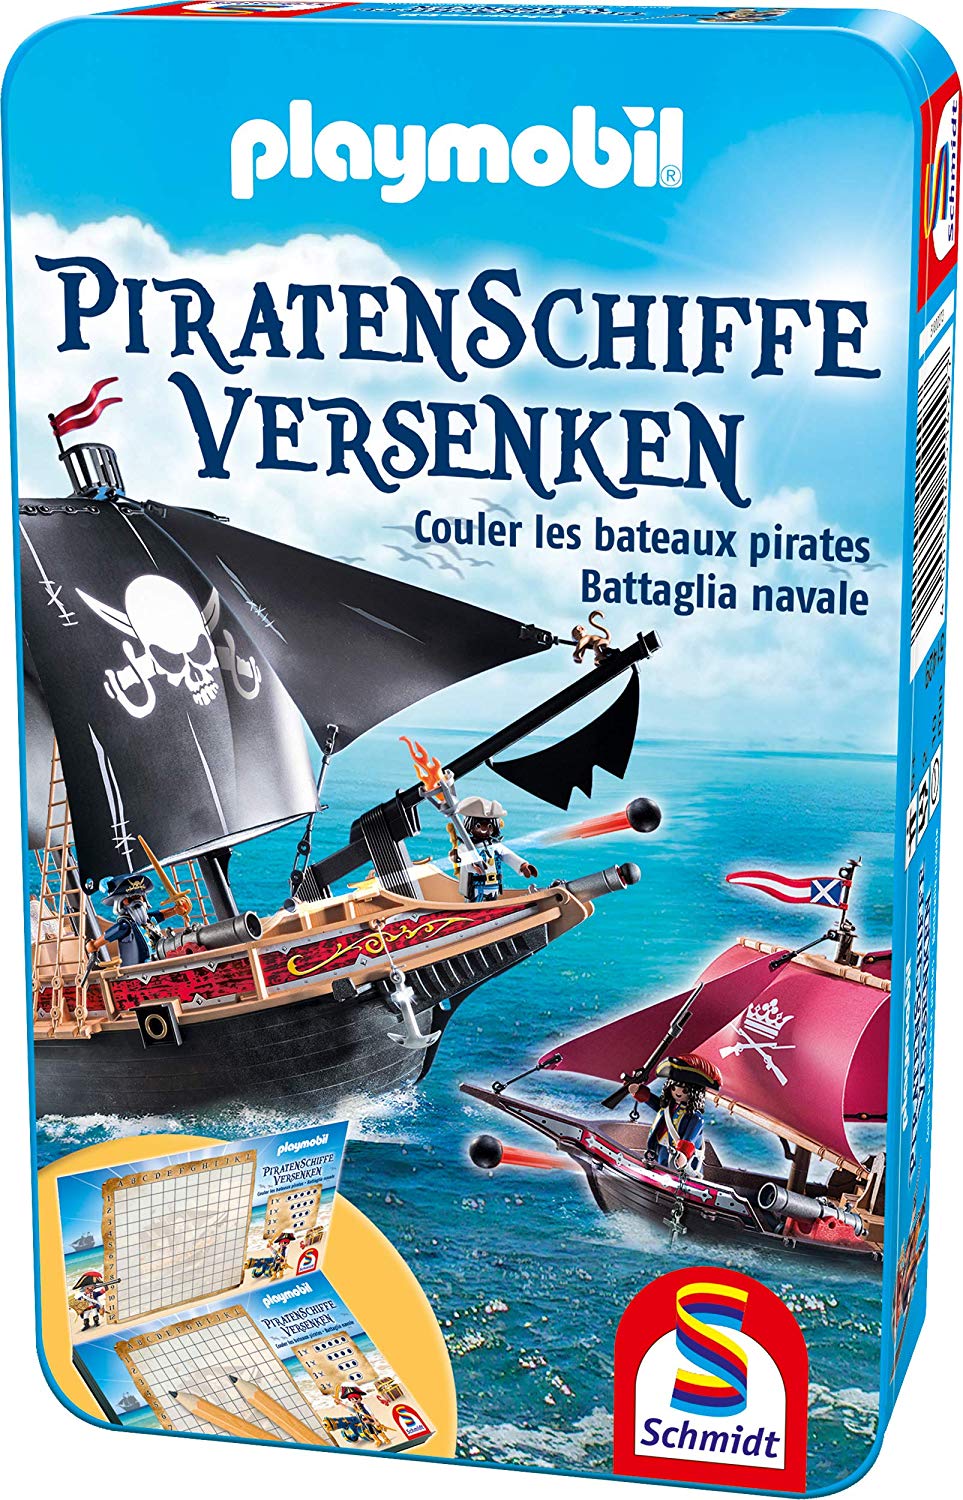 Barcos pirata hundidos de Playmobil solo 7,1€